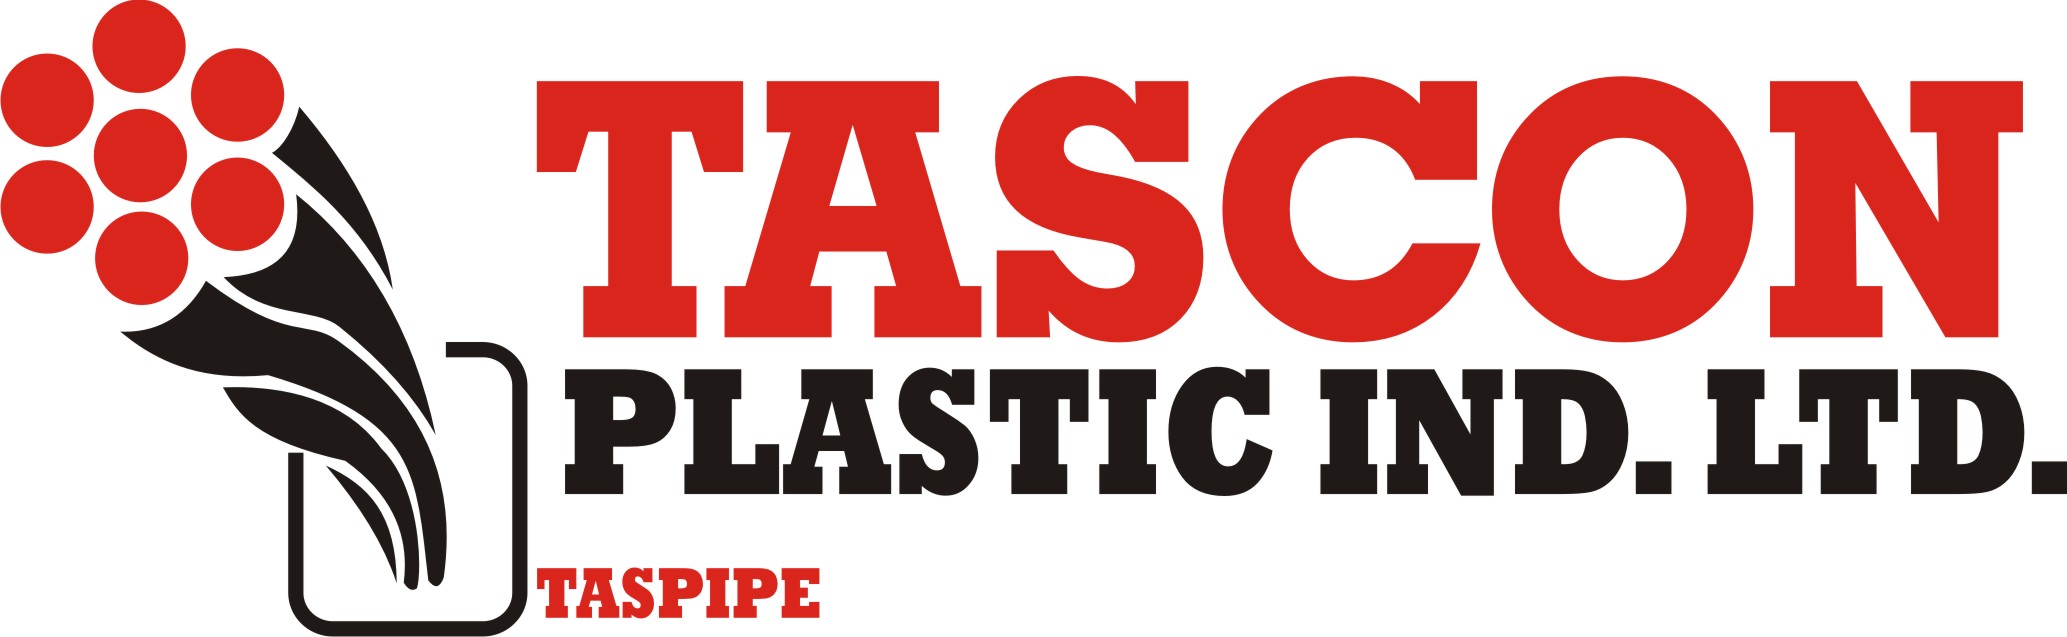 Tascon Plastic Limited